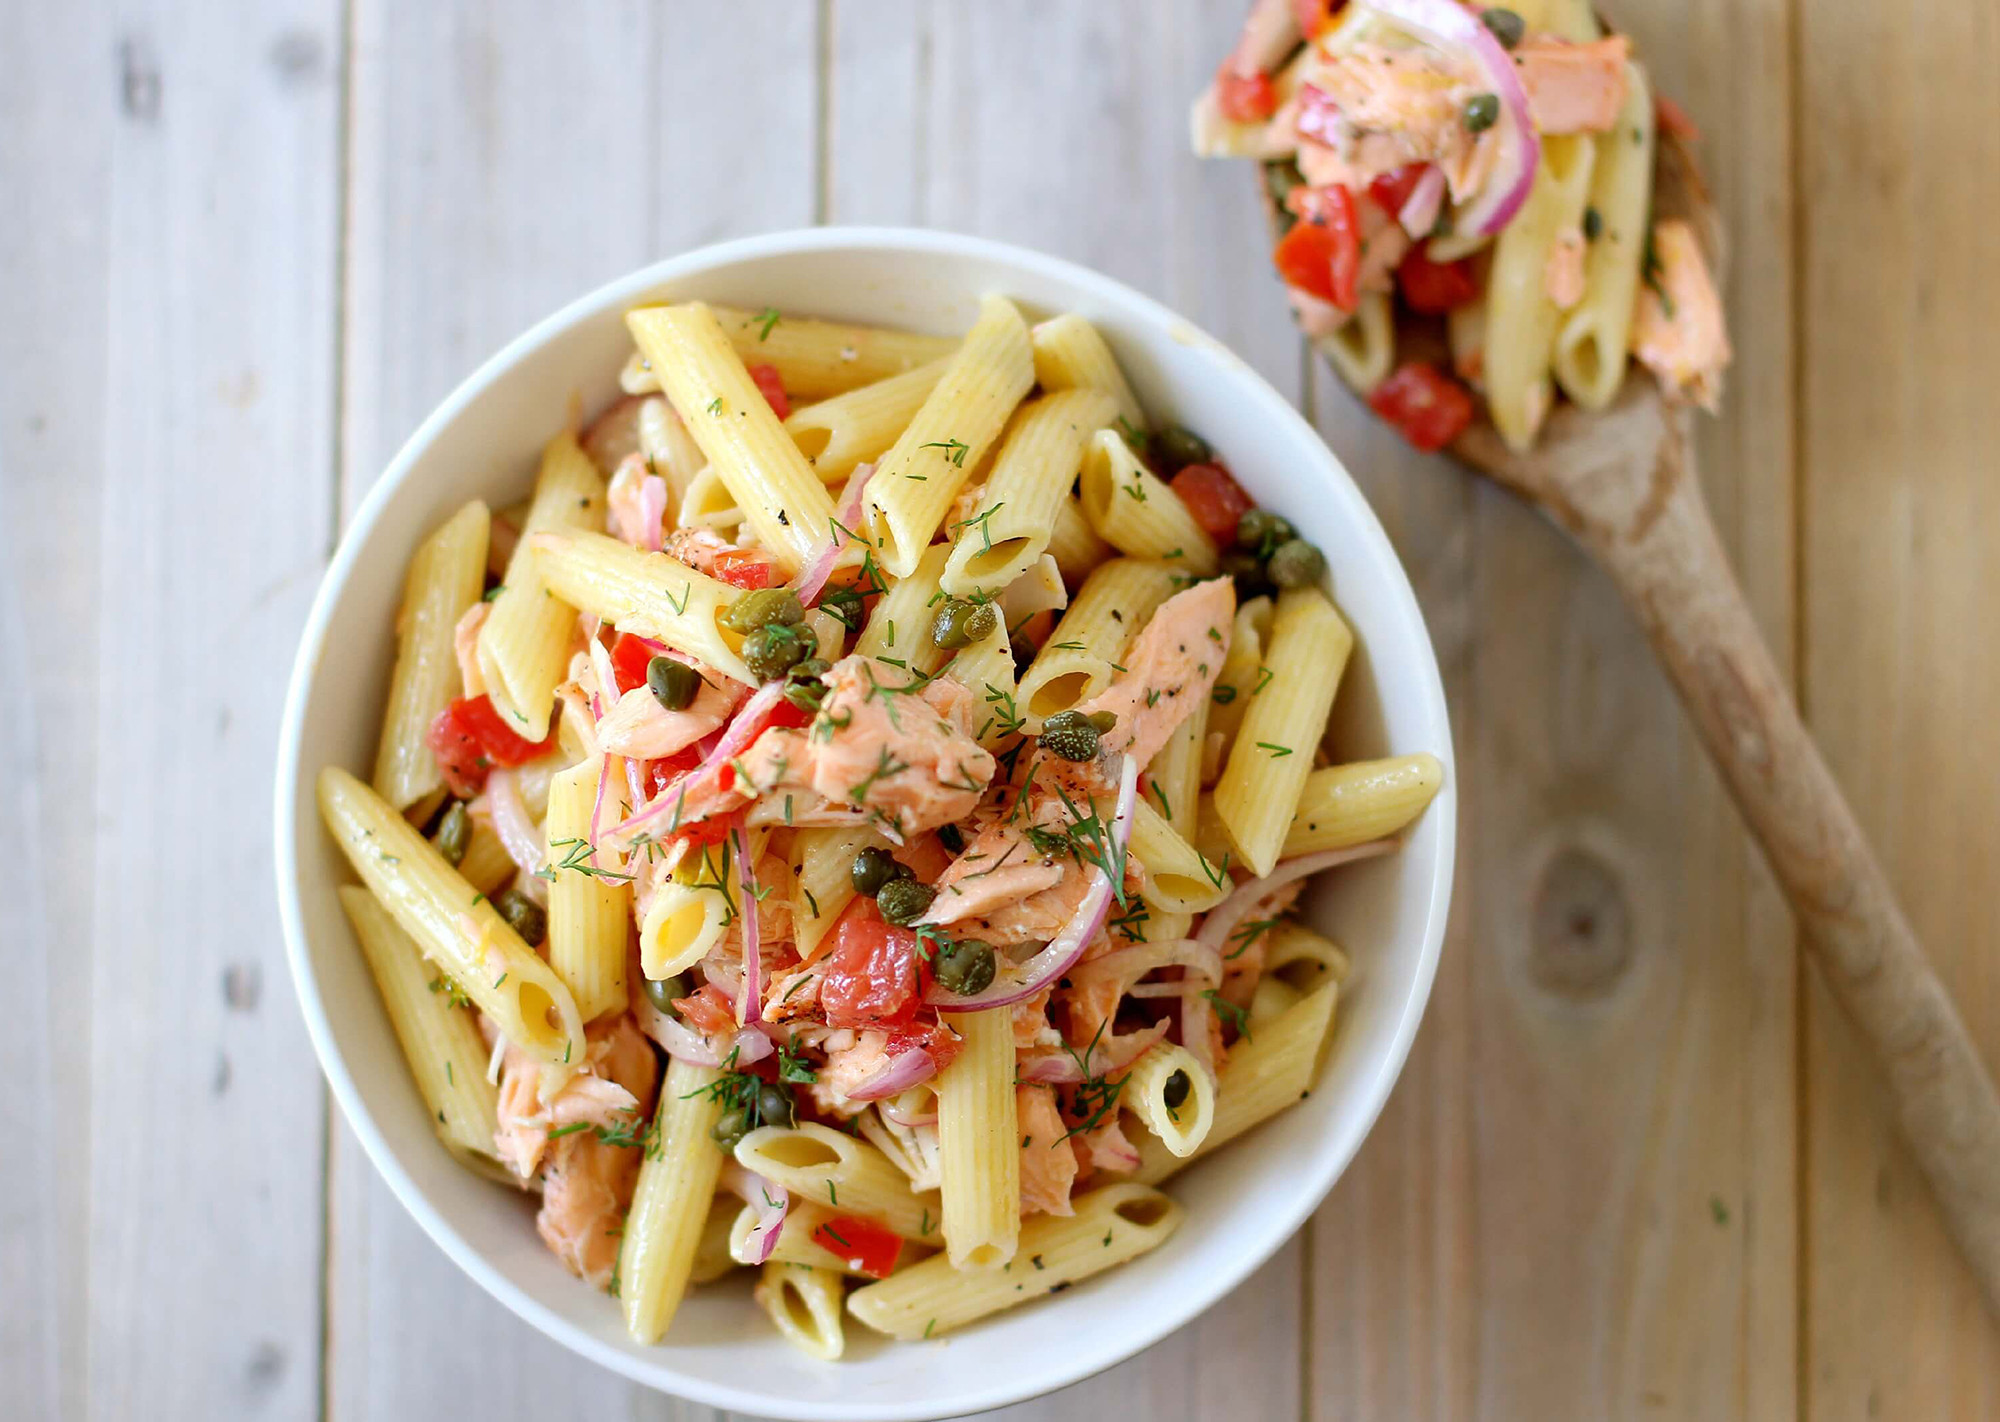 smoked-salmon-pasta-salad-best-of-prawn-and-smoked-salmon-creamy-pasta-salad-go-vita-of-smoked-salmon-pasta-salad.jpg